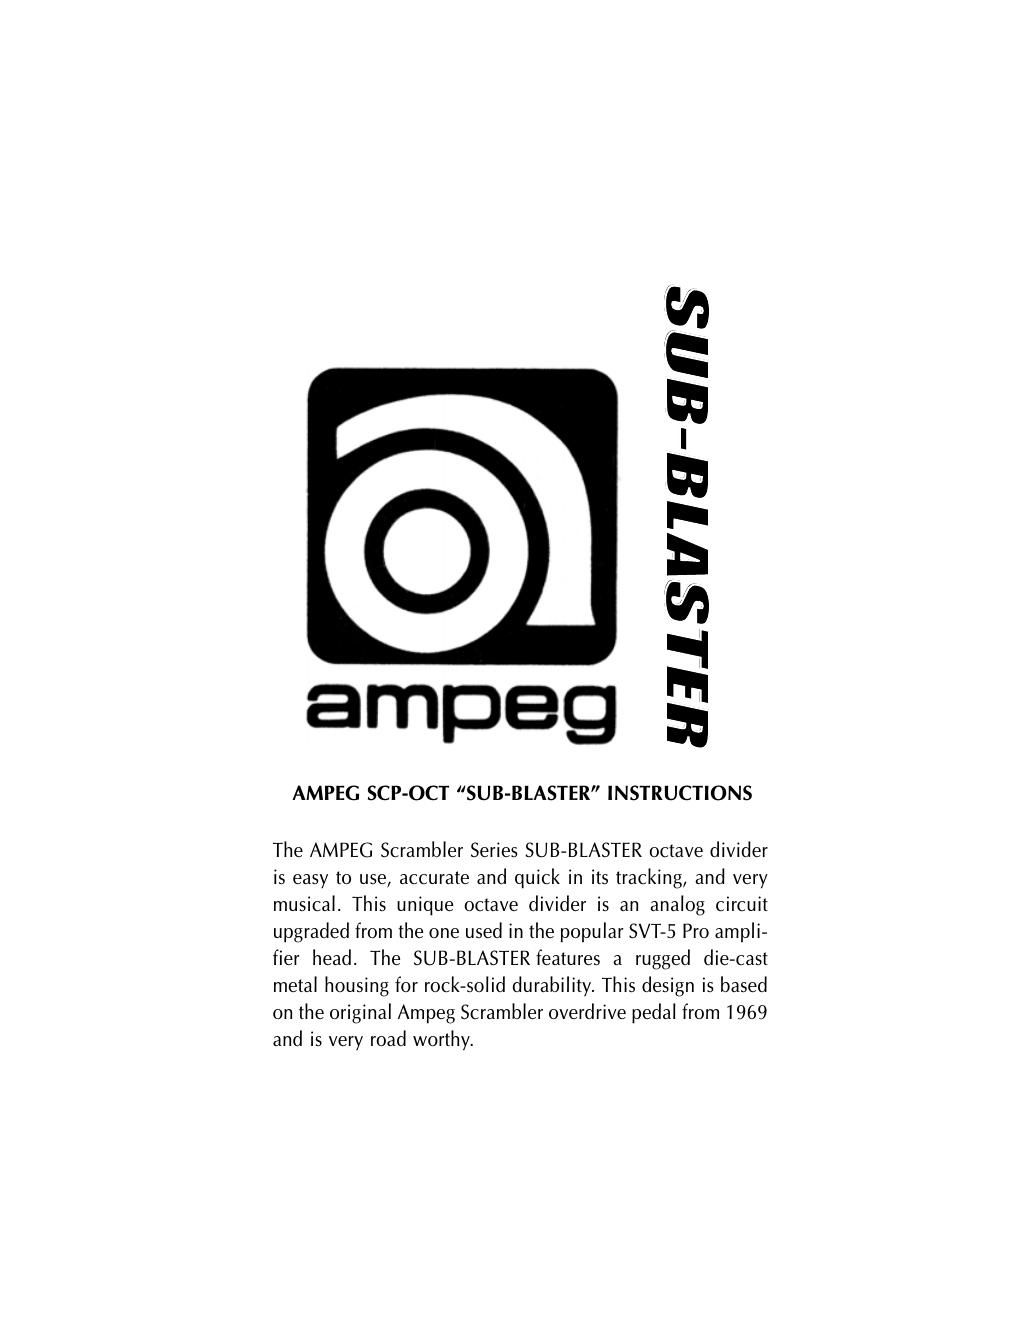 Free Audio Service Manuals - Free download ampeg sub blaster